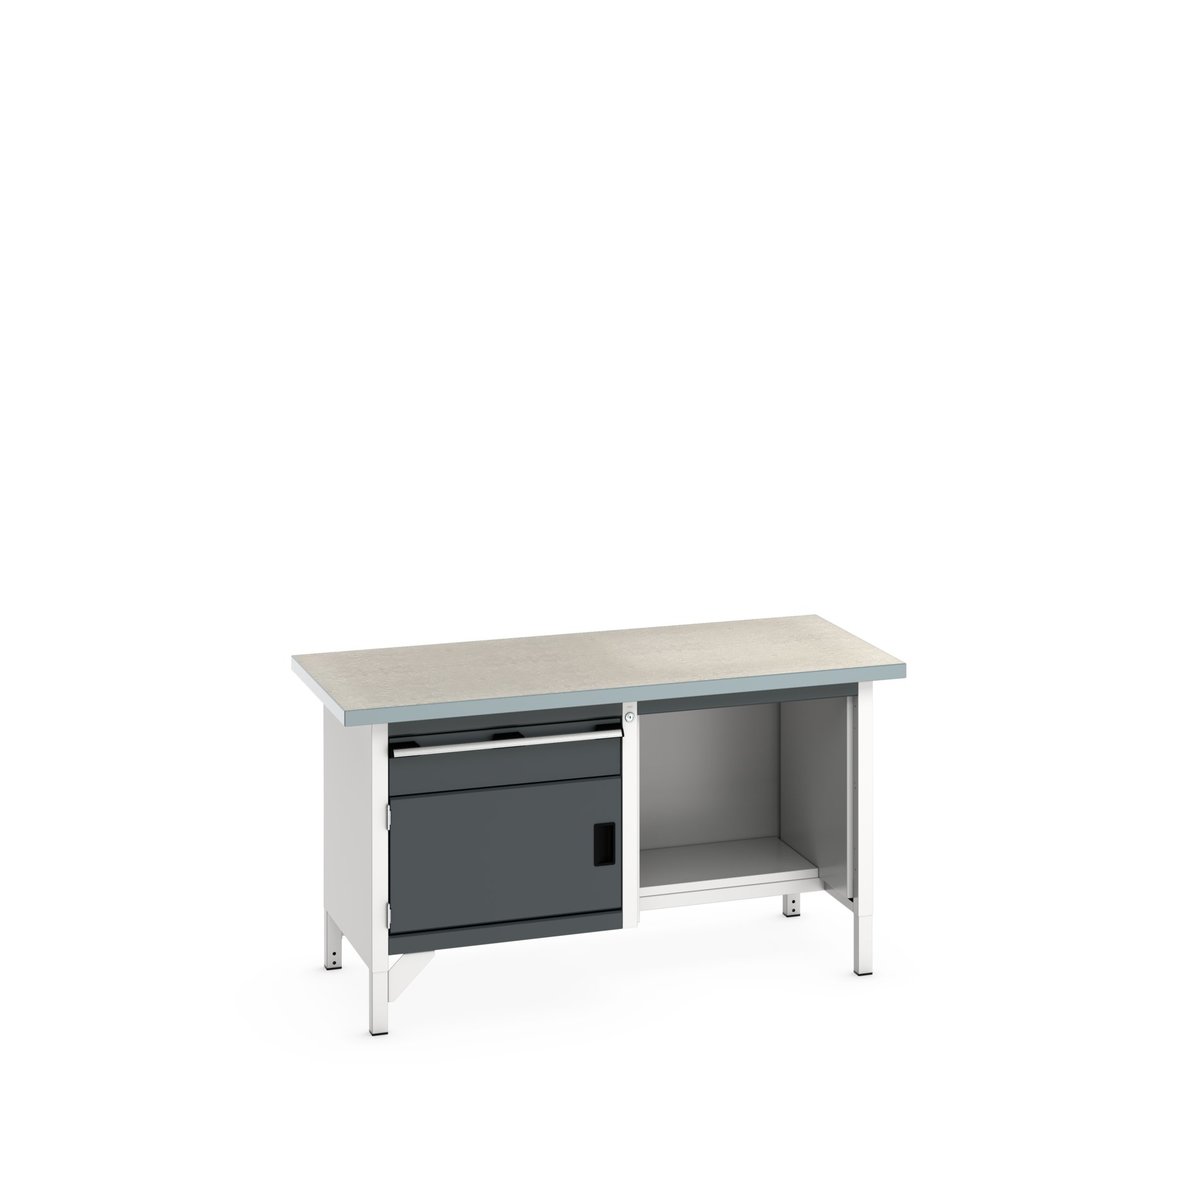 41002039. - cubio storage bench (lino)